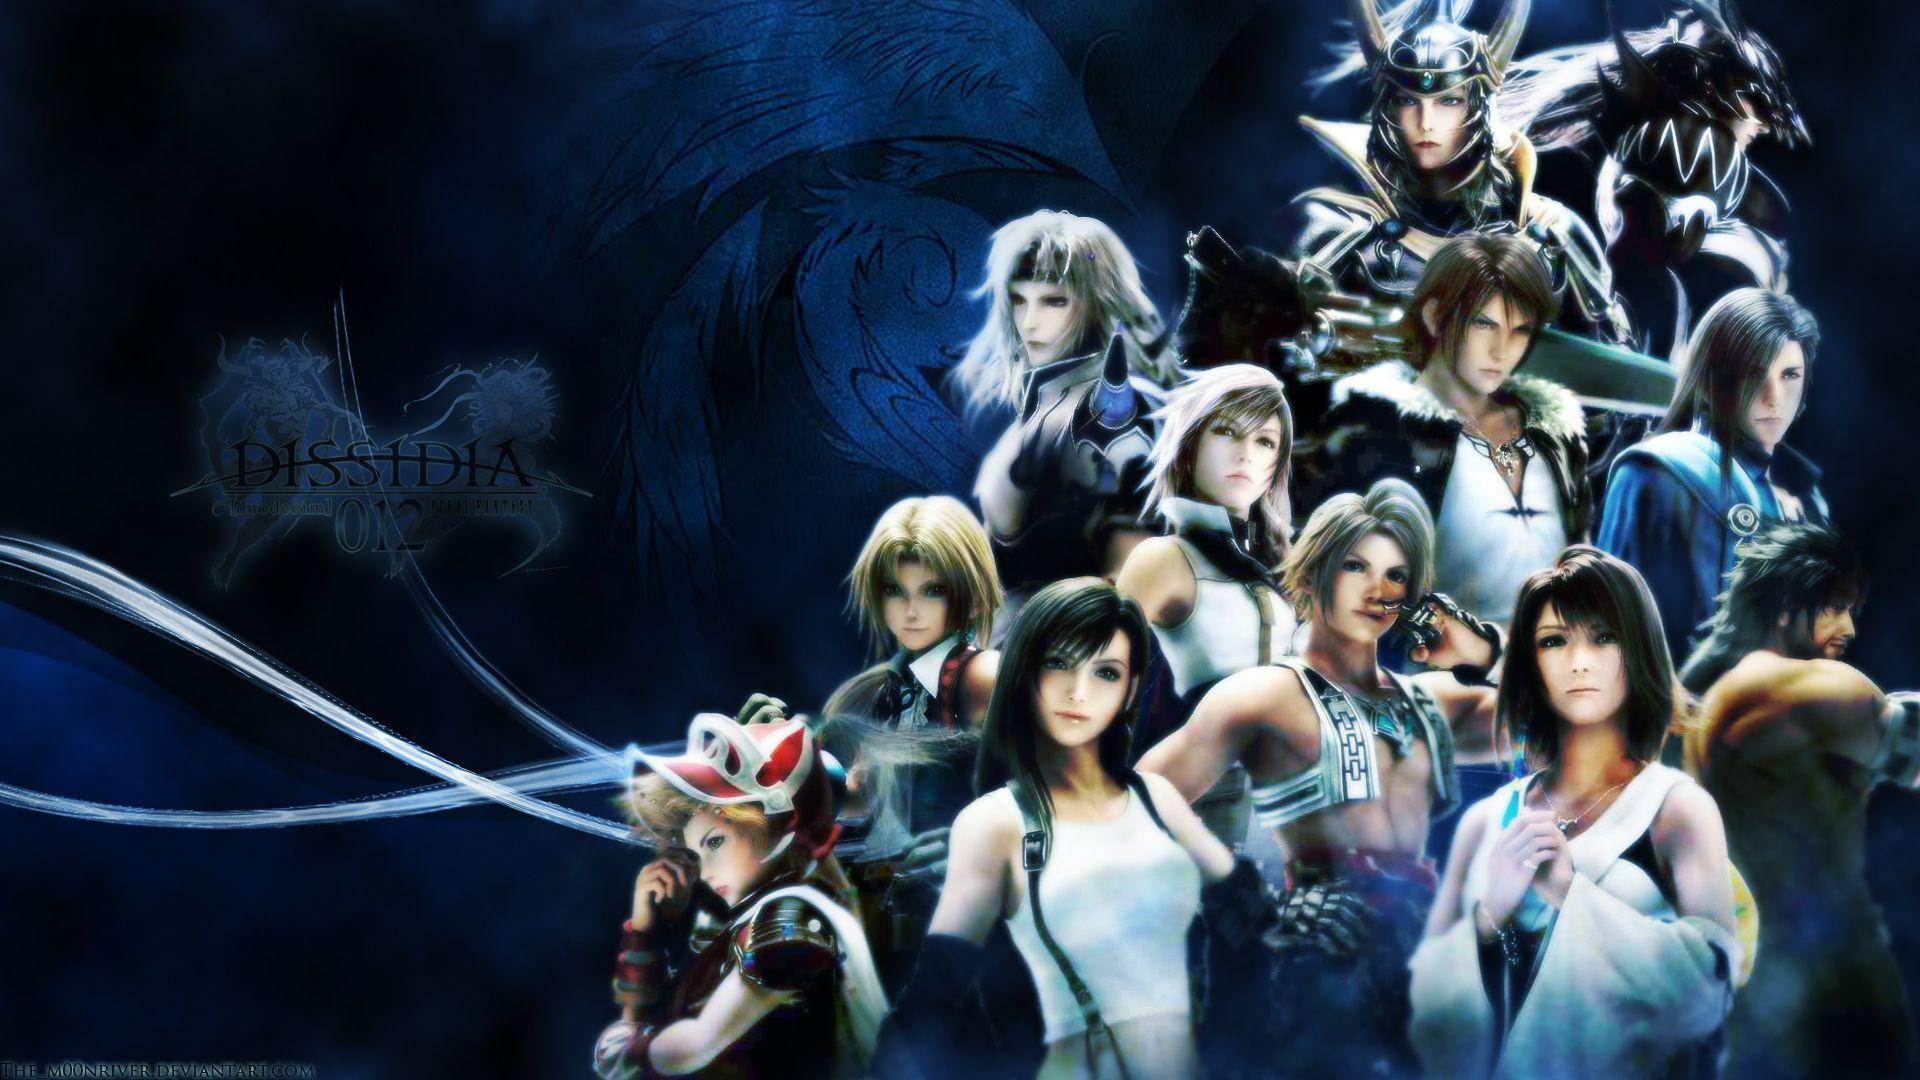 Final Fantasy Viii Wallpapers Top Free Final Fantasy Viii Backgrounds Wallpaperaccess